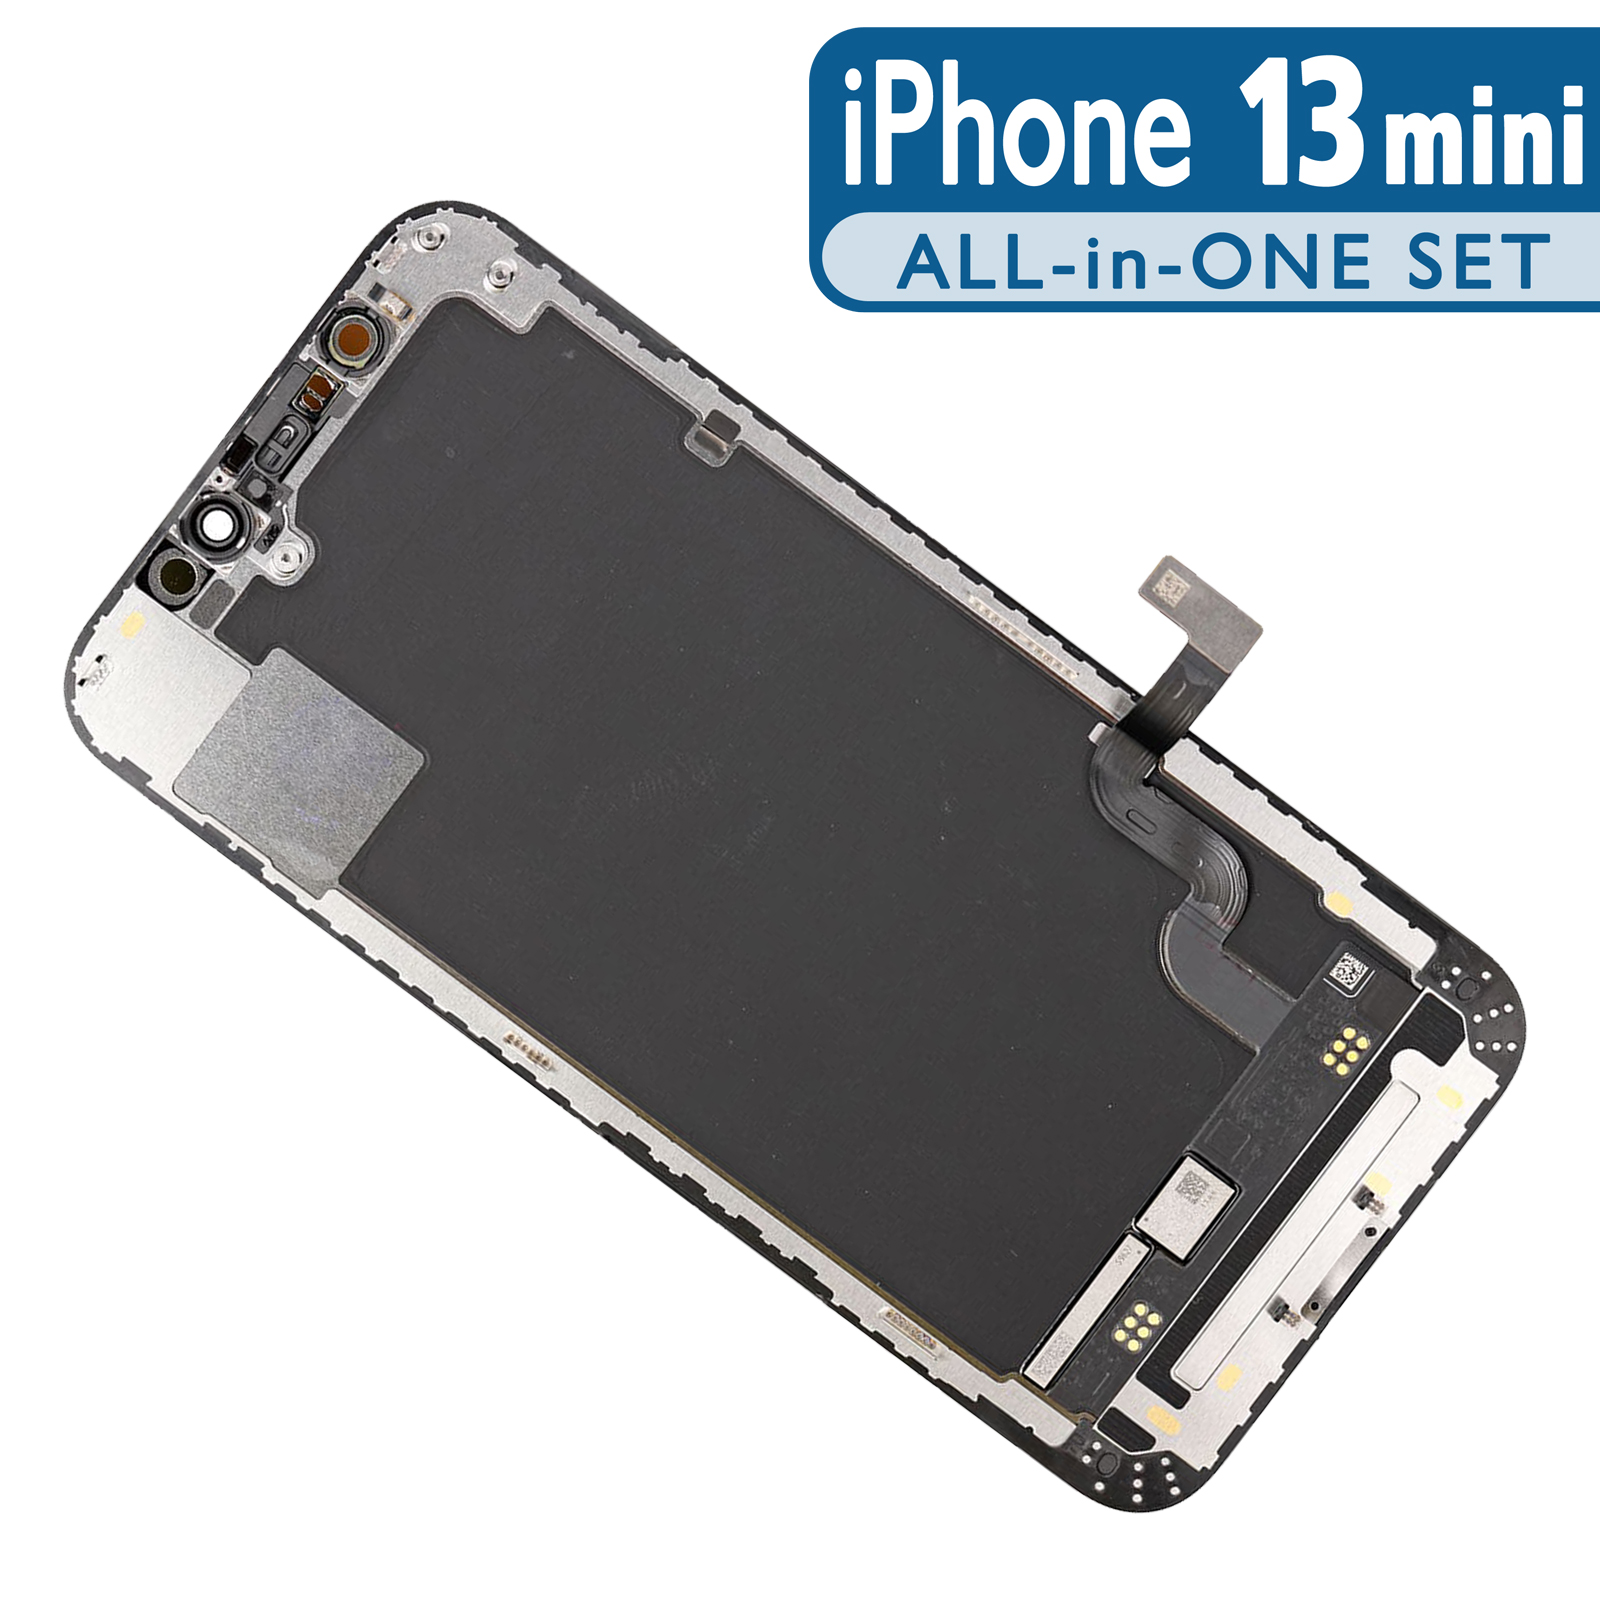 Display für iPhone 13 in in PROFESSIONAL-SOLED-Qualität